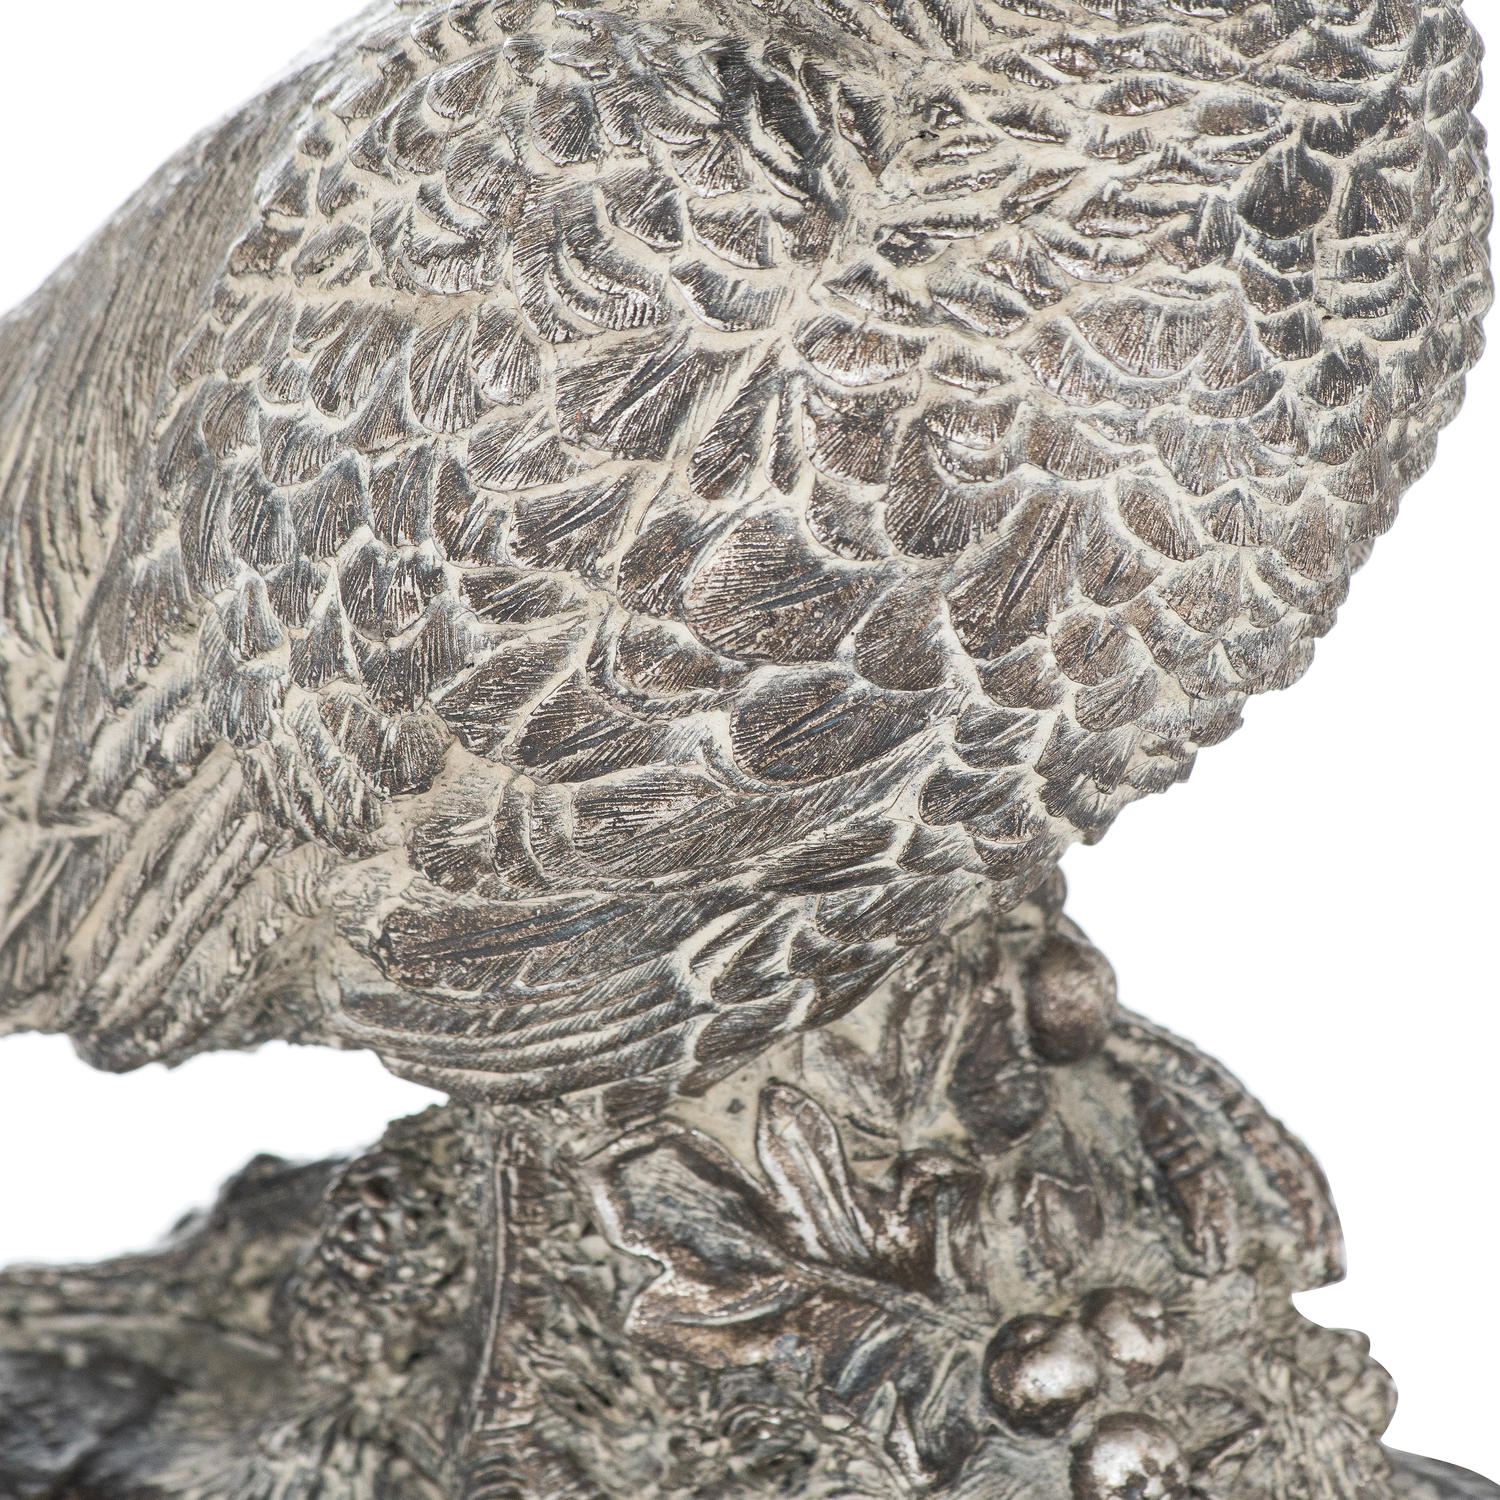 Antique Silver Cock Pheasant Ornament - Image 2